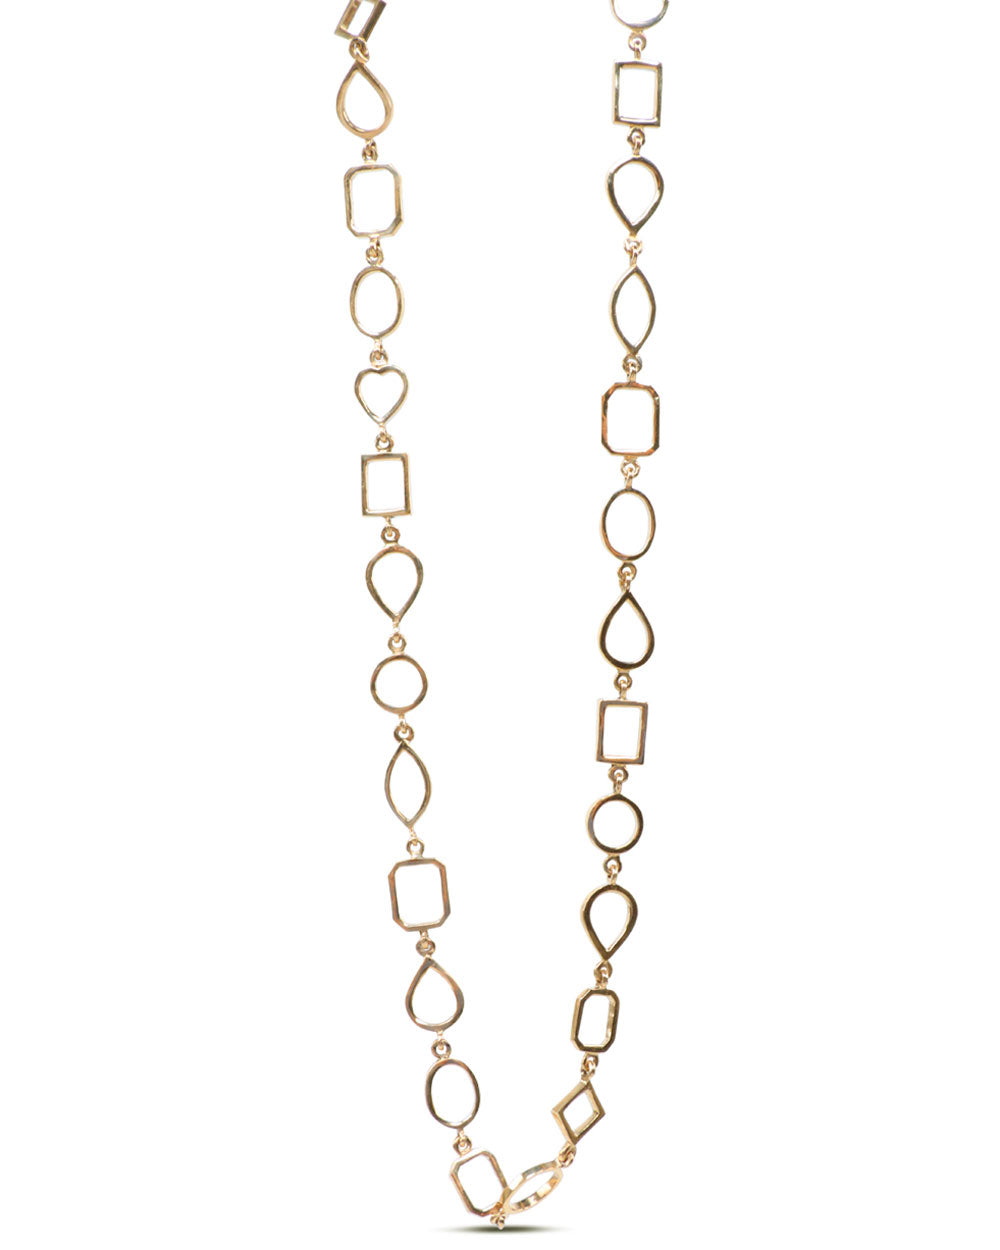 Mixed Bezel Chain Necklace